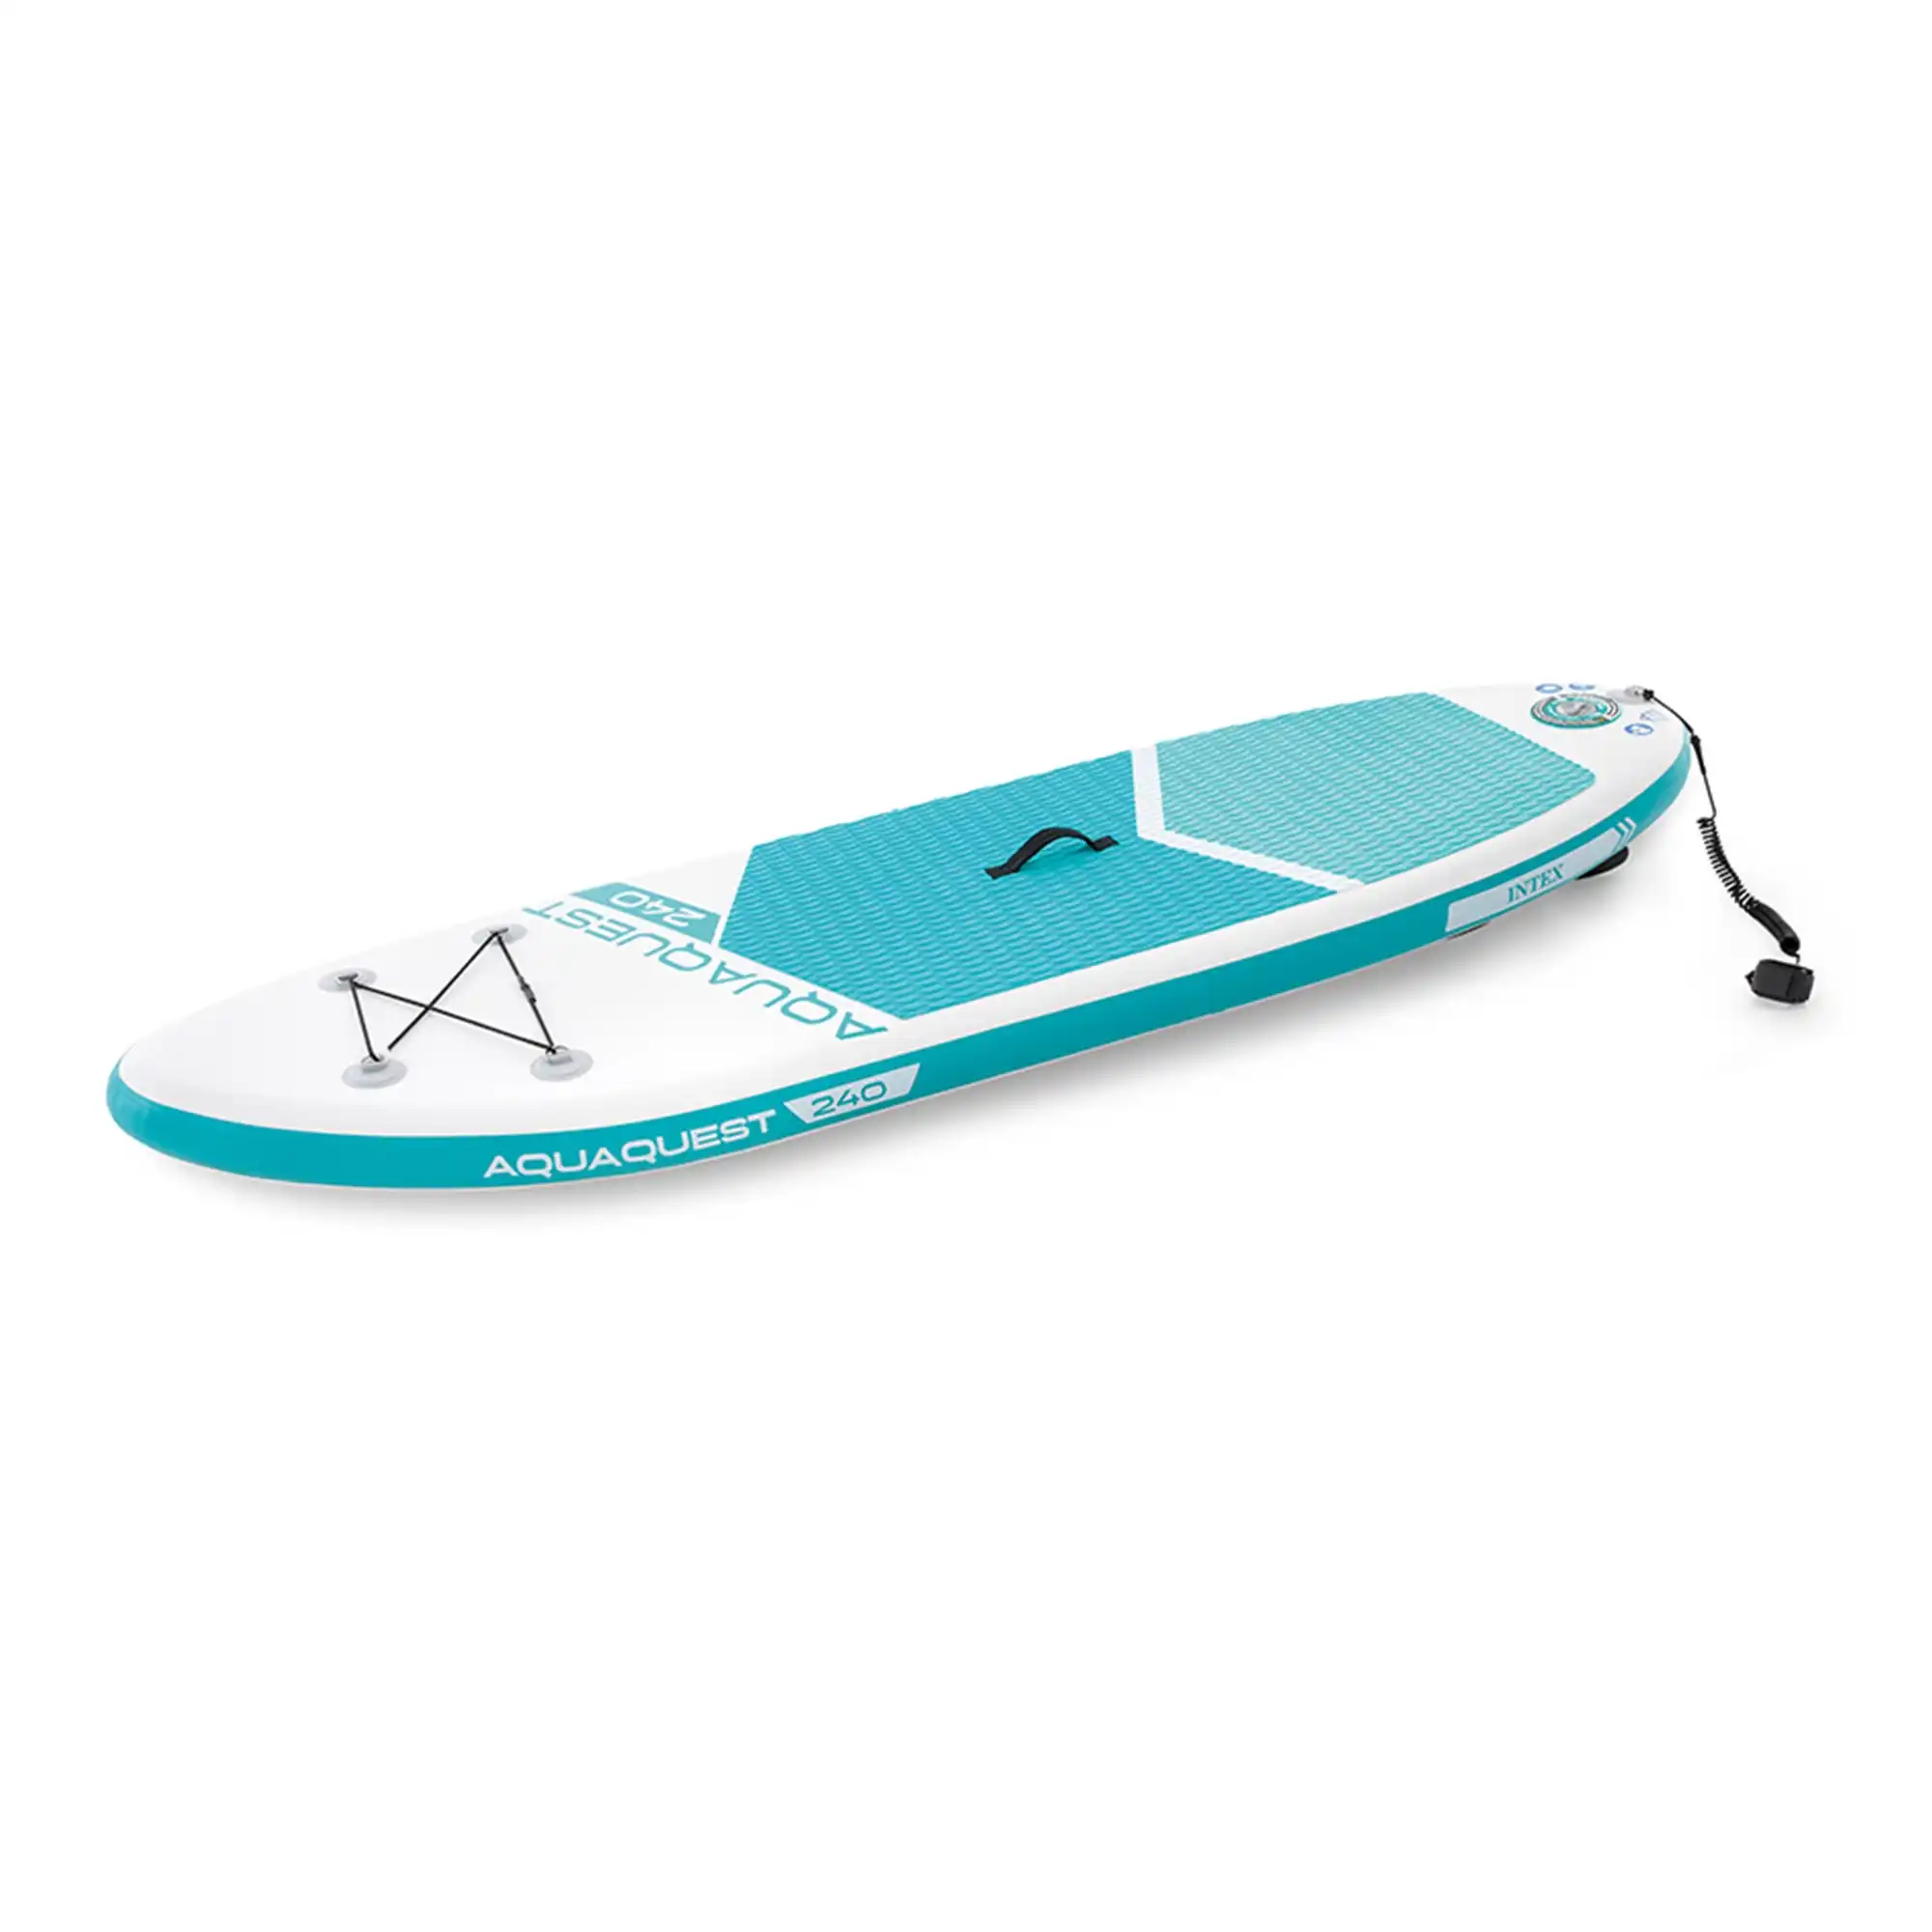 Irklentė Aquaquest 240 Youth SUP Paddleboard